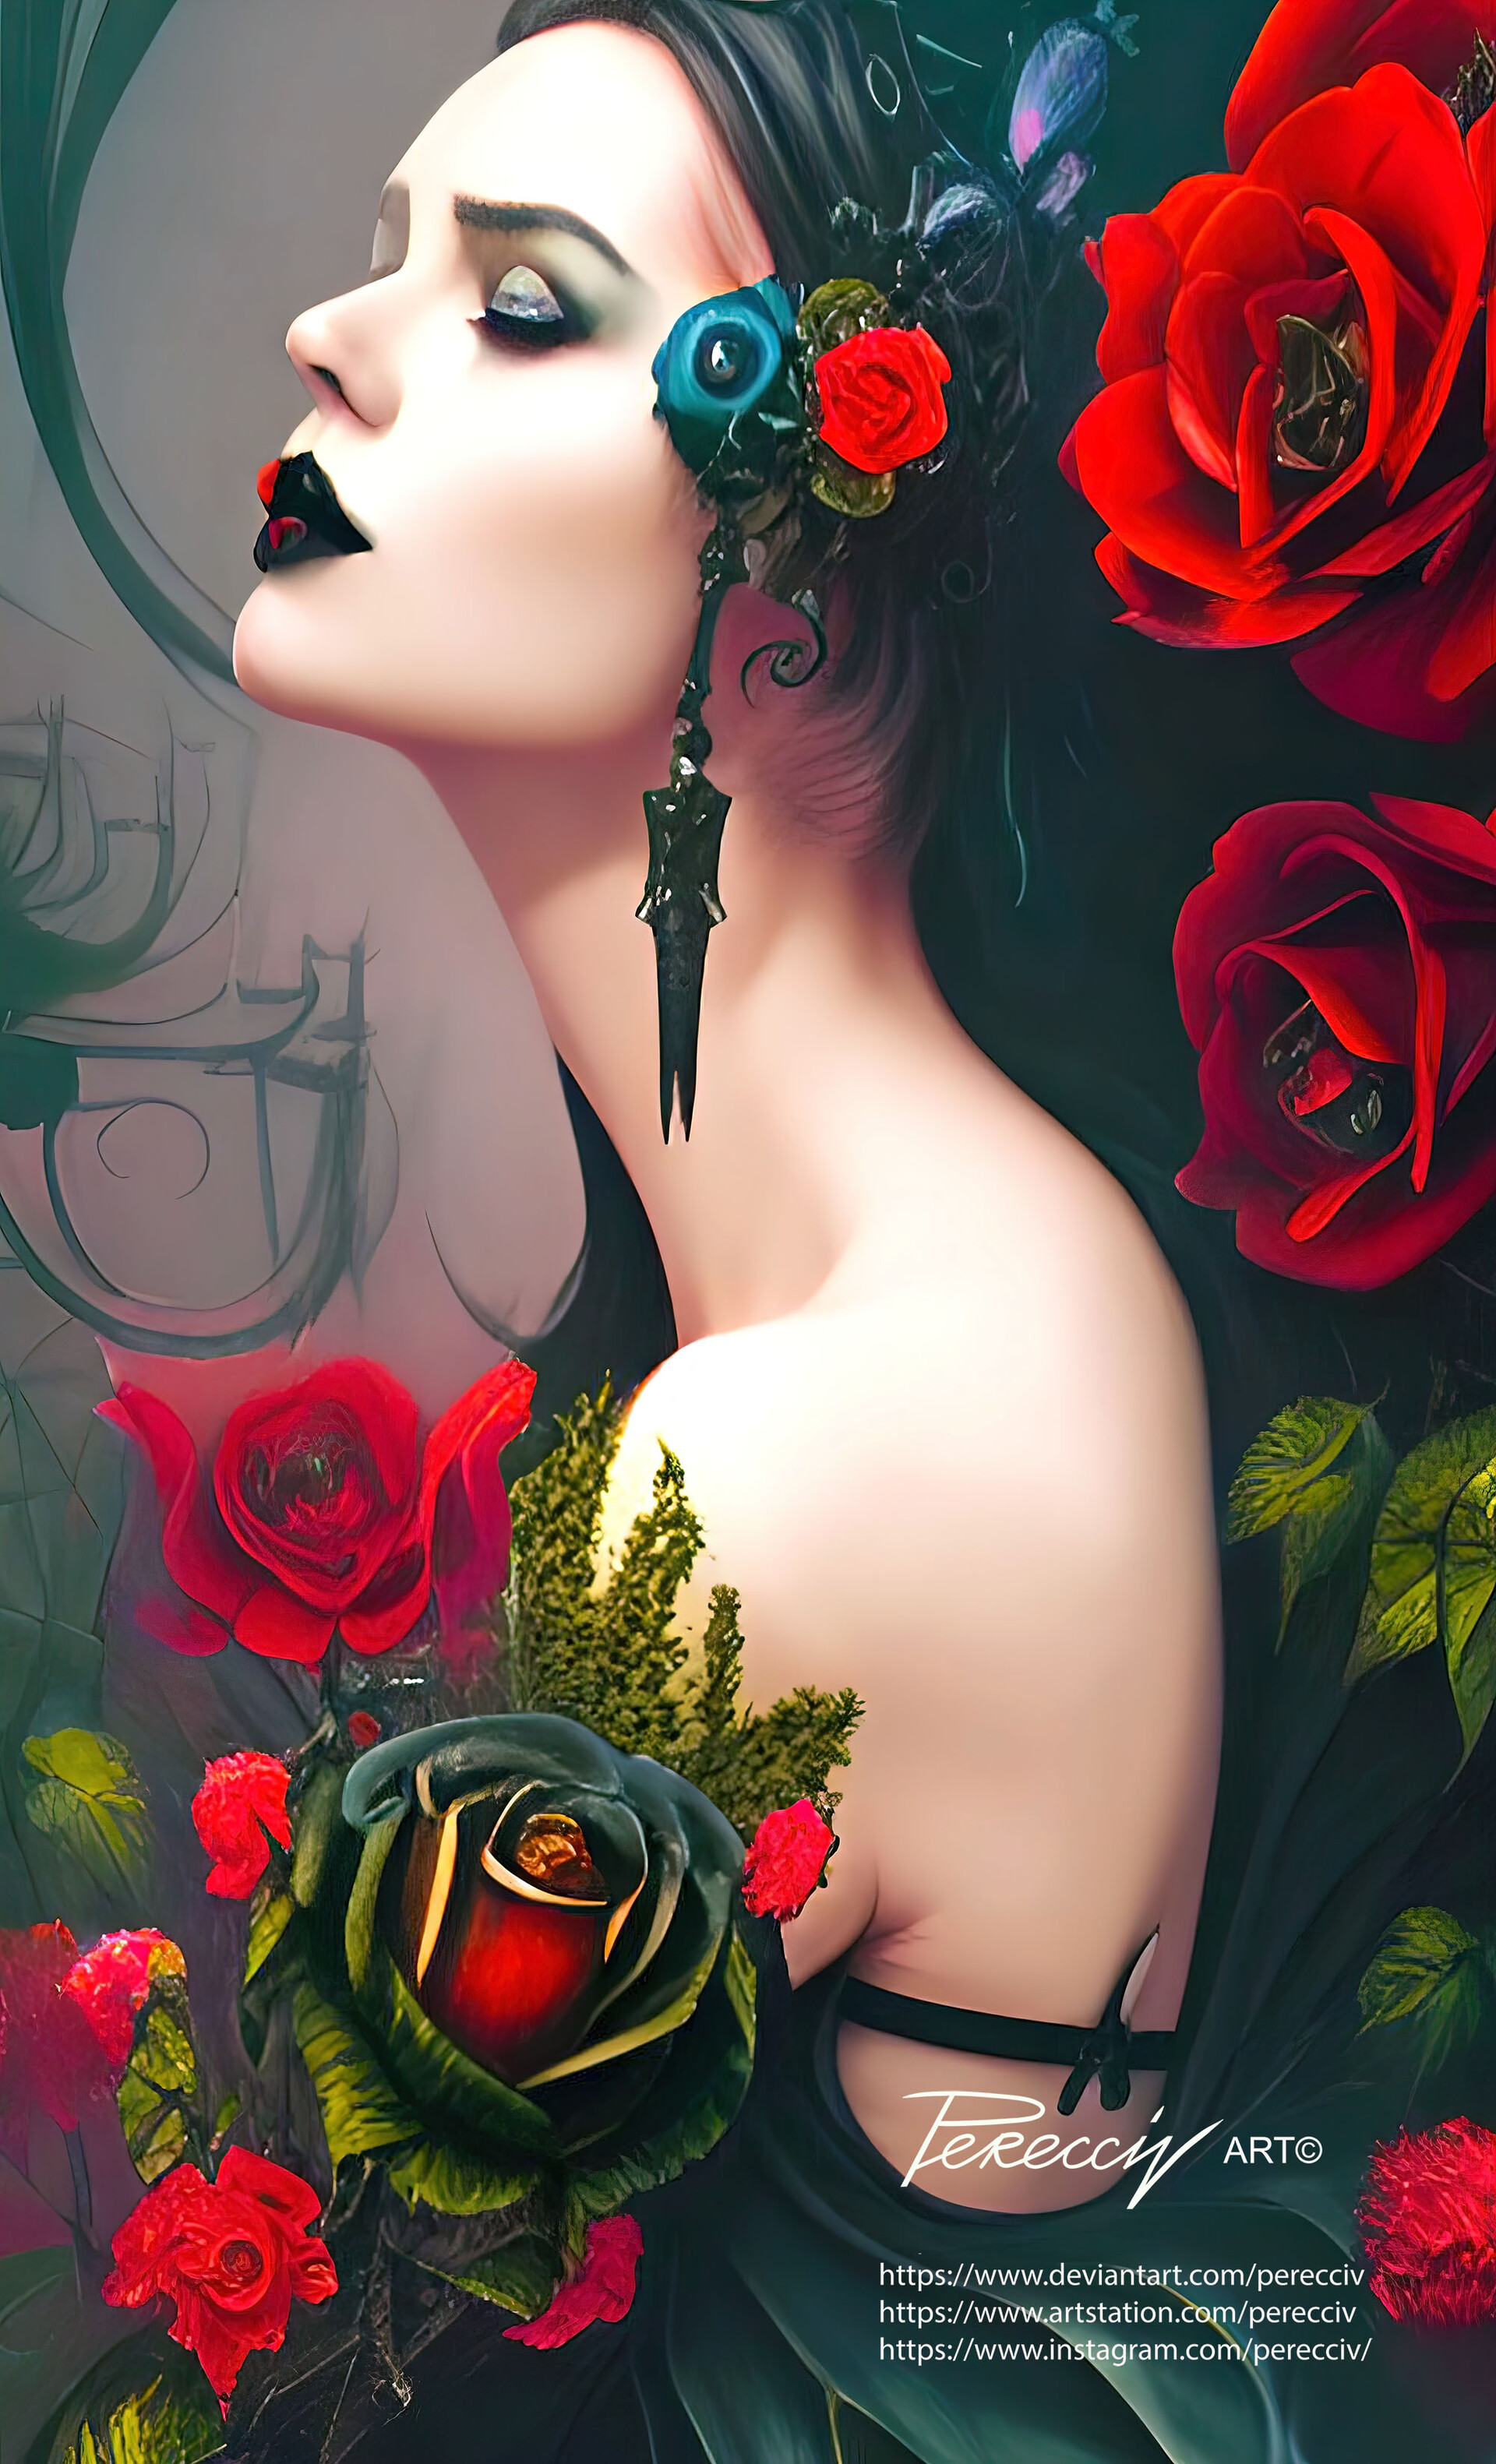 ArtStation - Beautiful girl in red roses